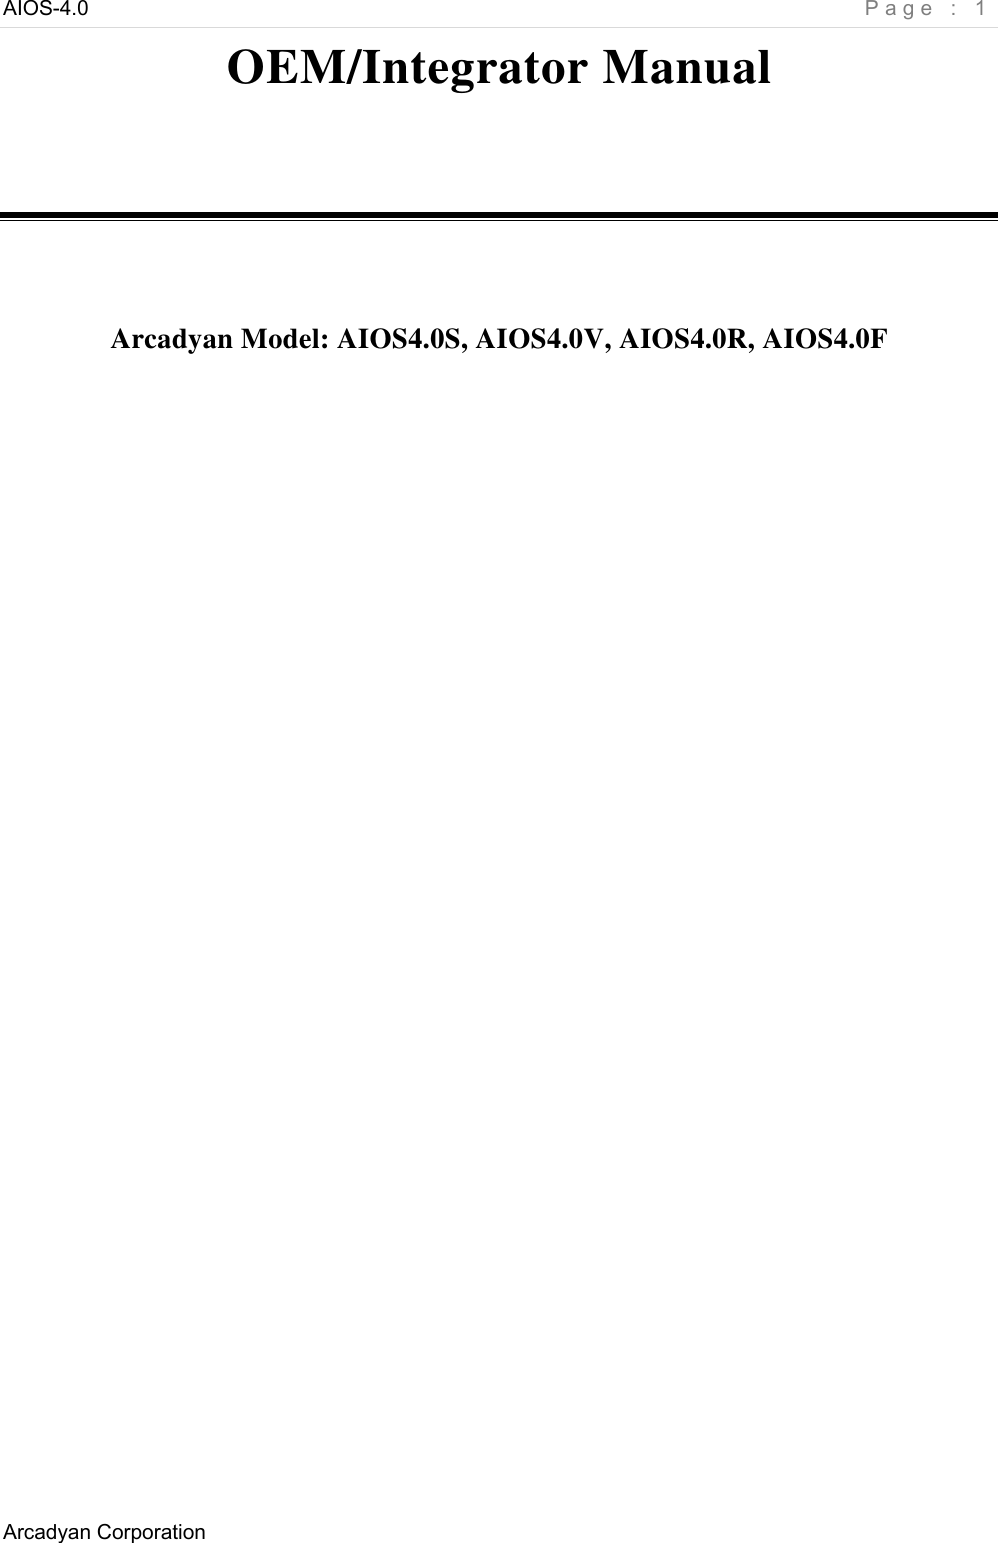 AIOS-4.0    Page : 1 Arcadyan Corporation     OEM/Integrator Manual    Arcadyan Model: AIOS4.0S, AIOS4.0V, AIOS4.0R, AIOS4.0F 